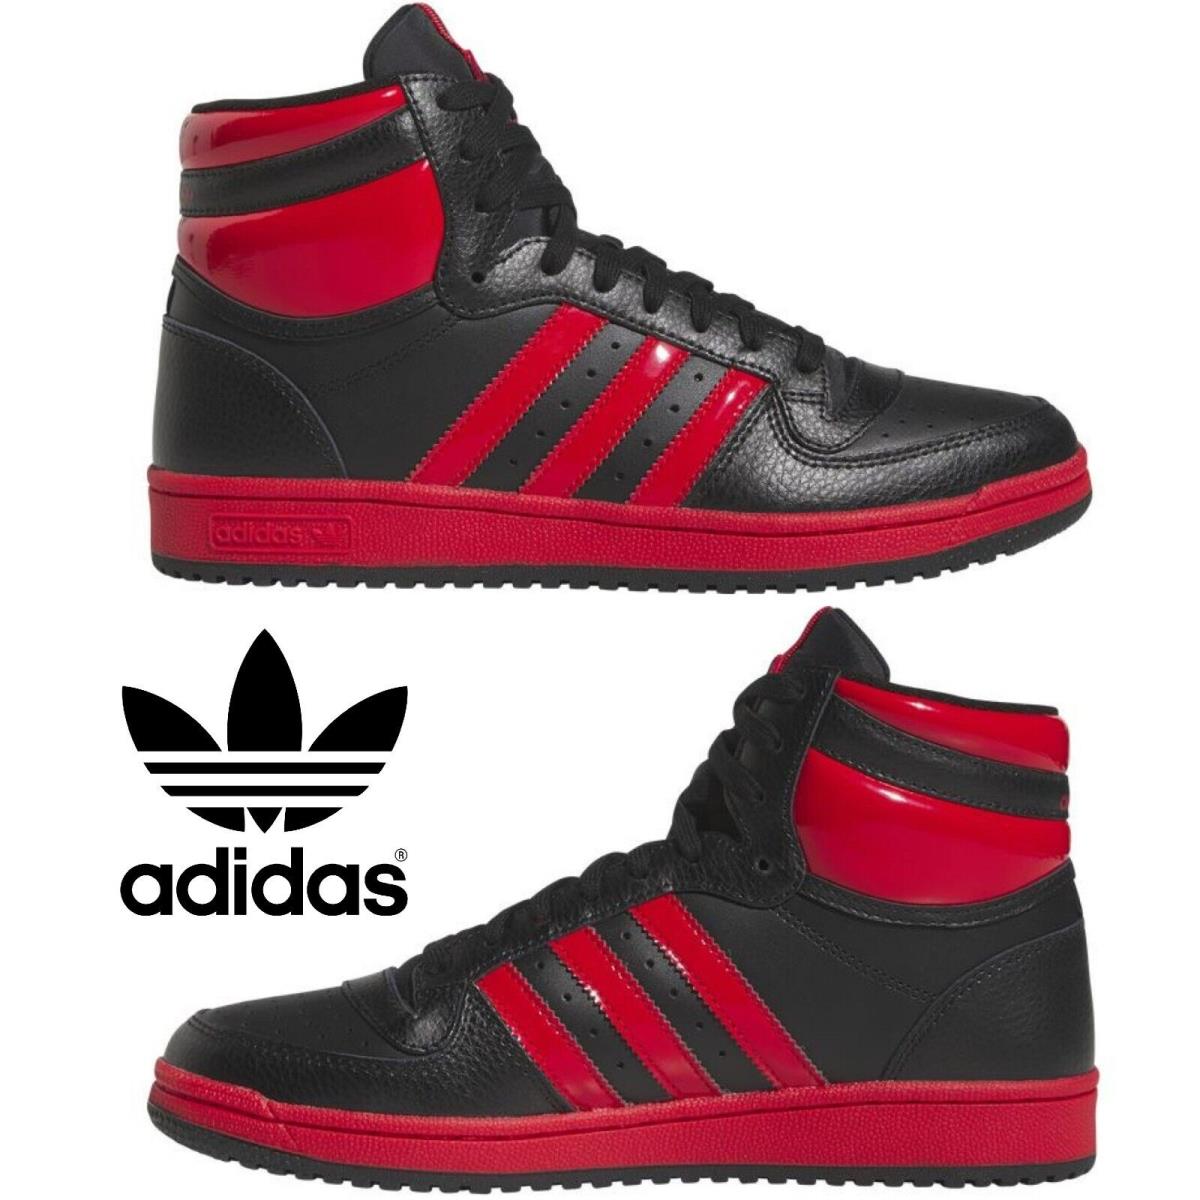 Adidas Originals Top Ten Men`s Sneakers Comfort Casual Shoes High Top Black Red - Black, Manufacturer: Black/Better Scarlet